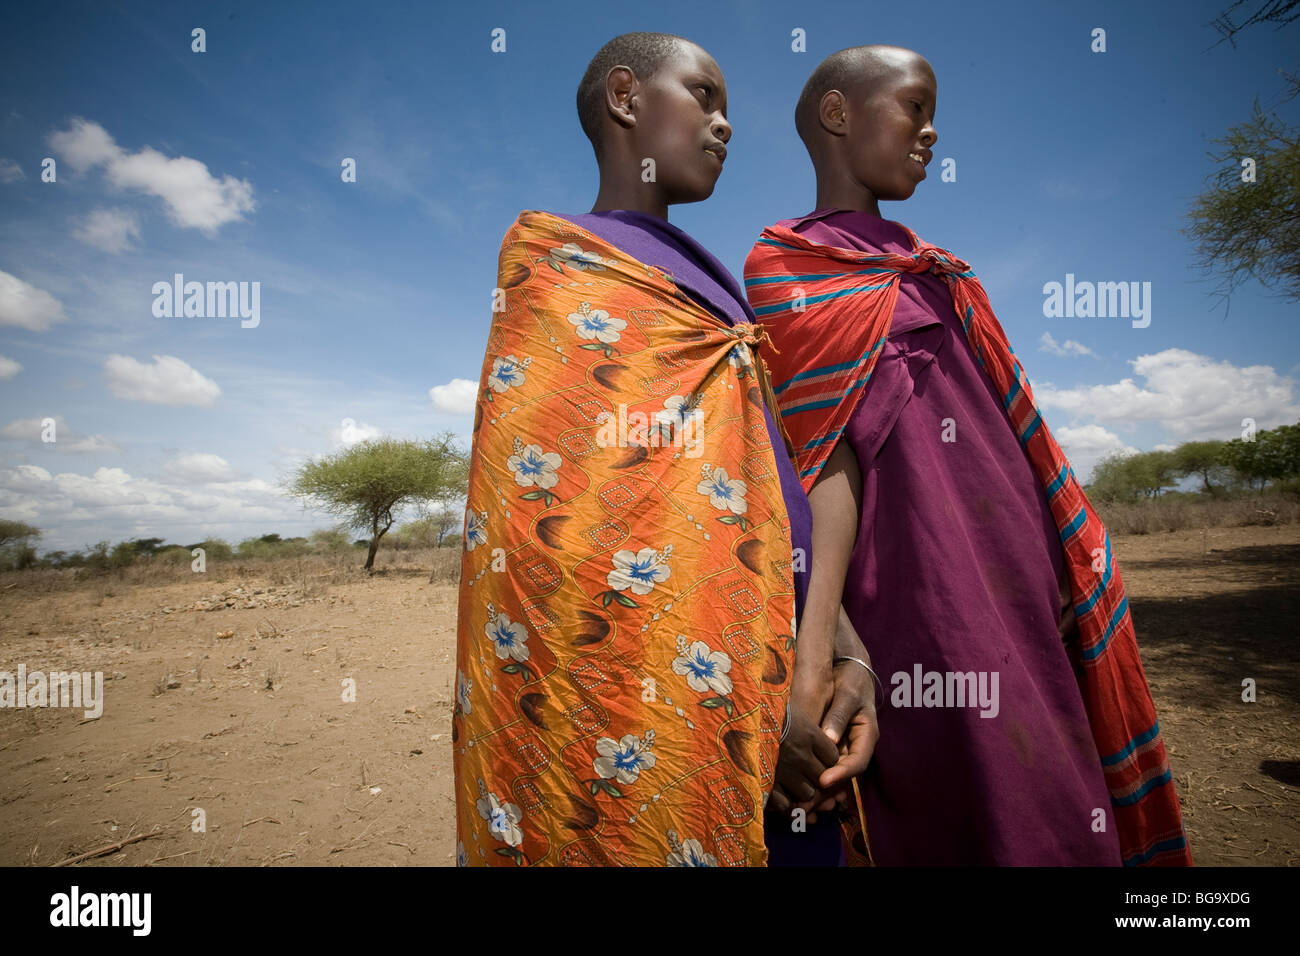 Girls in colorful dress - Maasai village of Tindagani, Kilimanjaro Region, Tanzania. Stock Photo